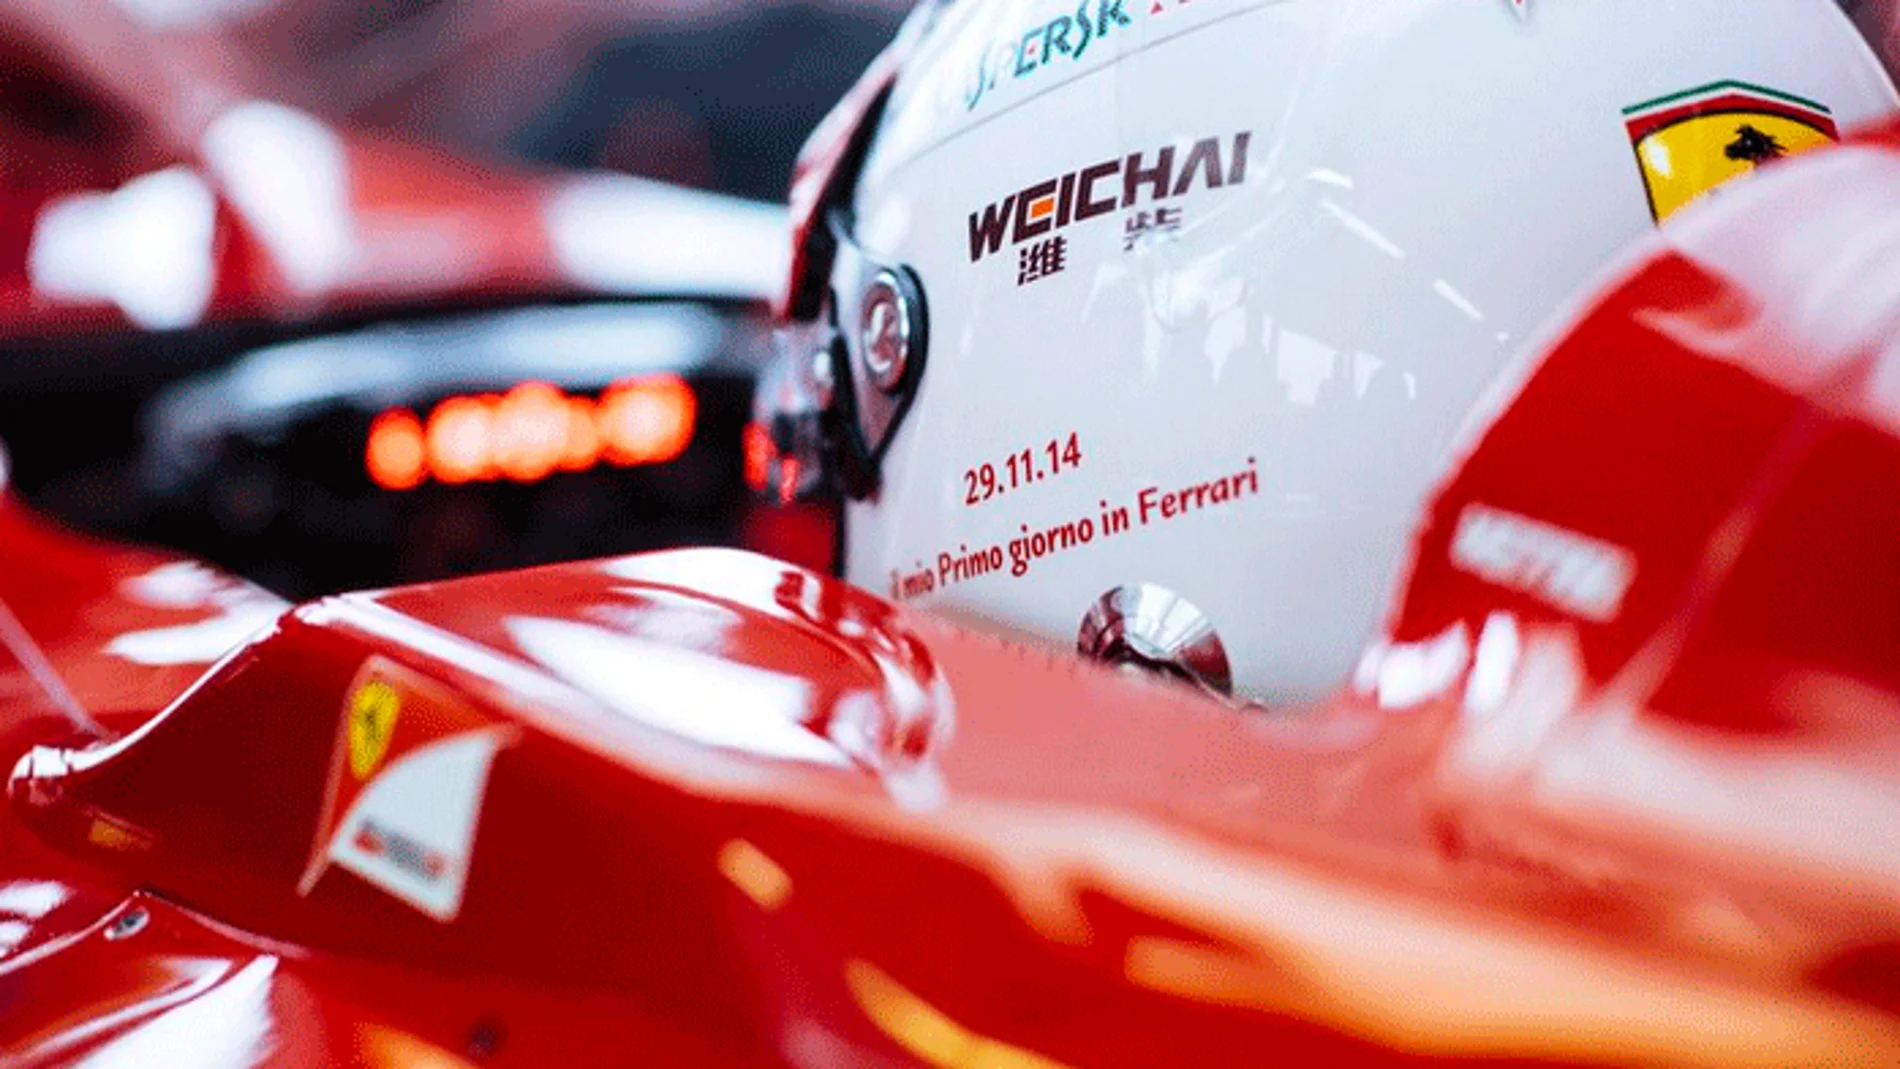 "Mi primer día en Ferrari"